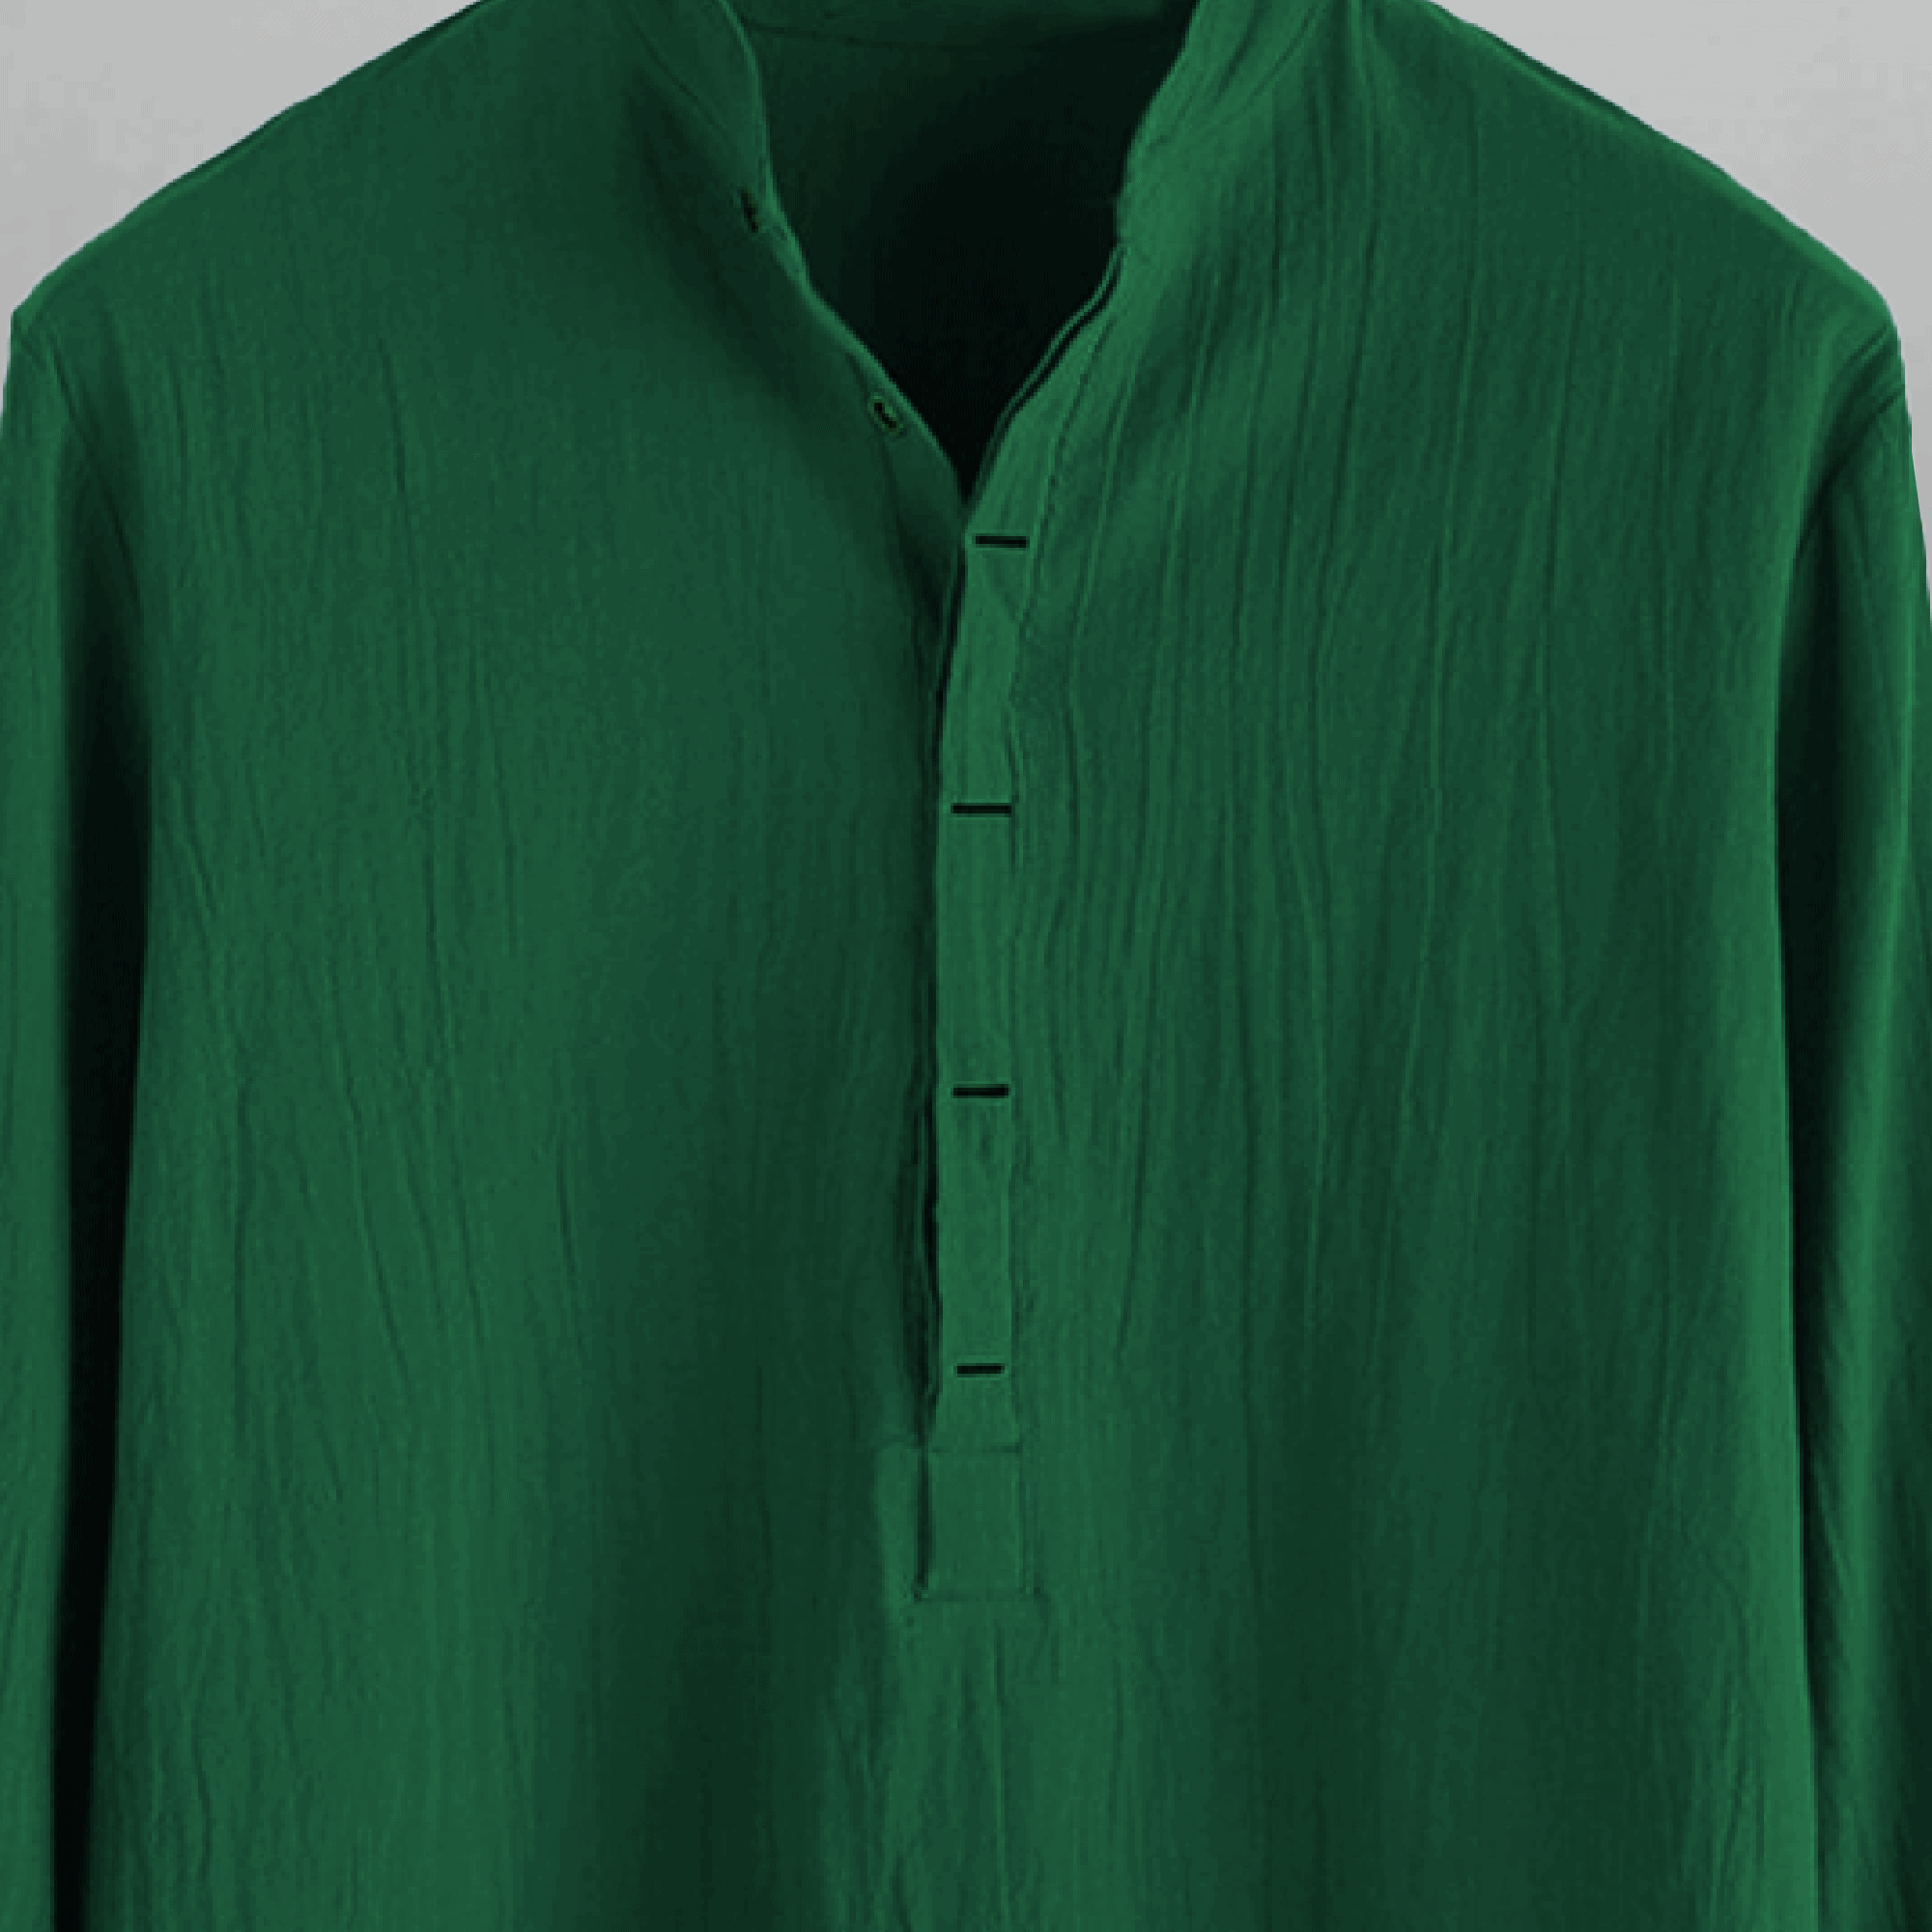 Men's Green T-shirt style textured shirt-RMS013